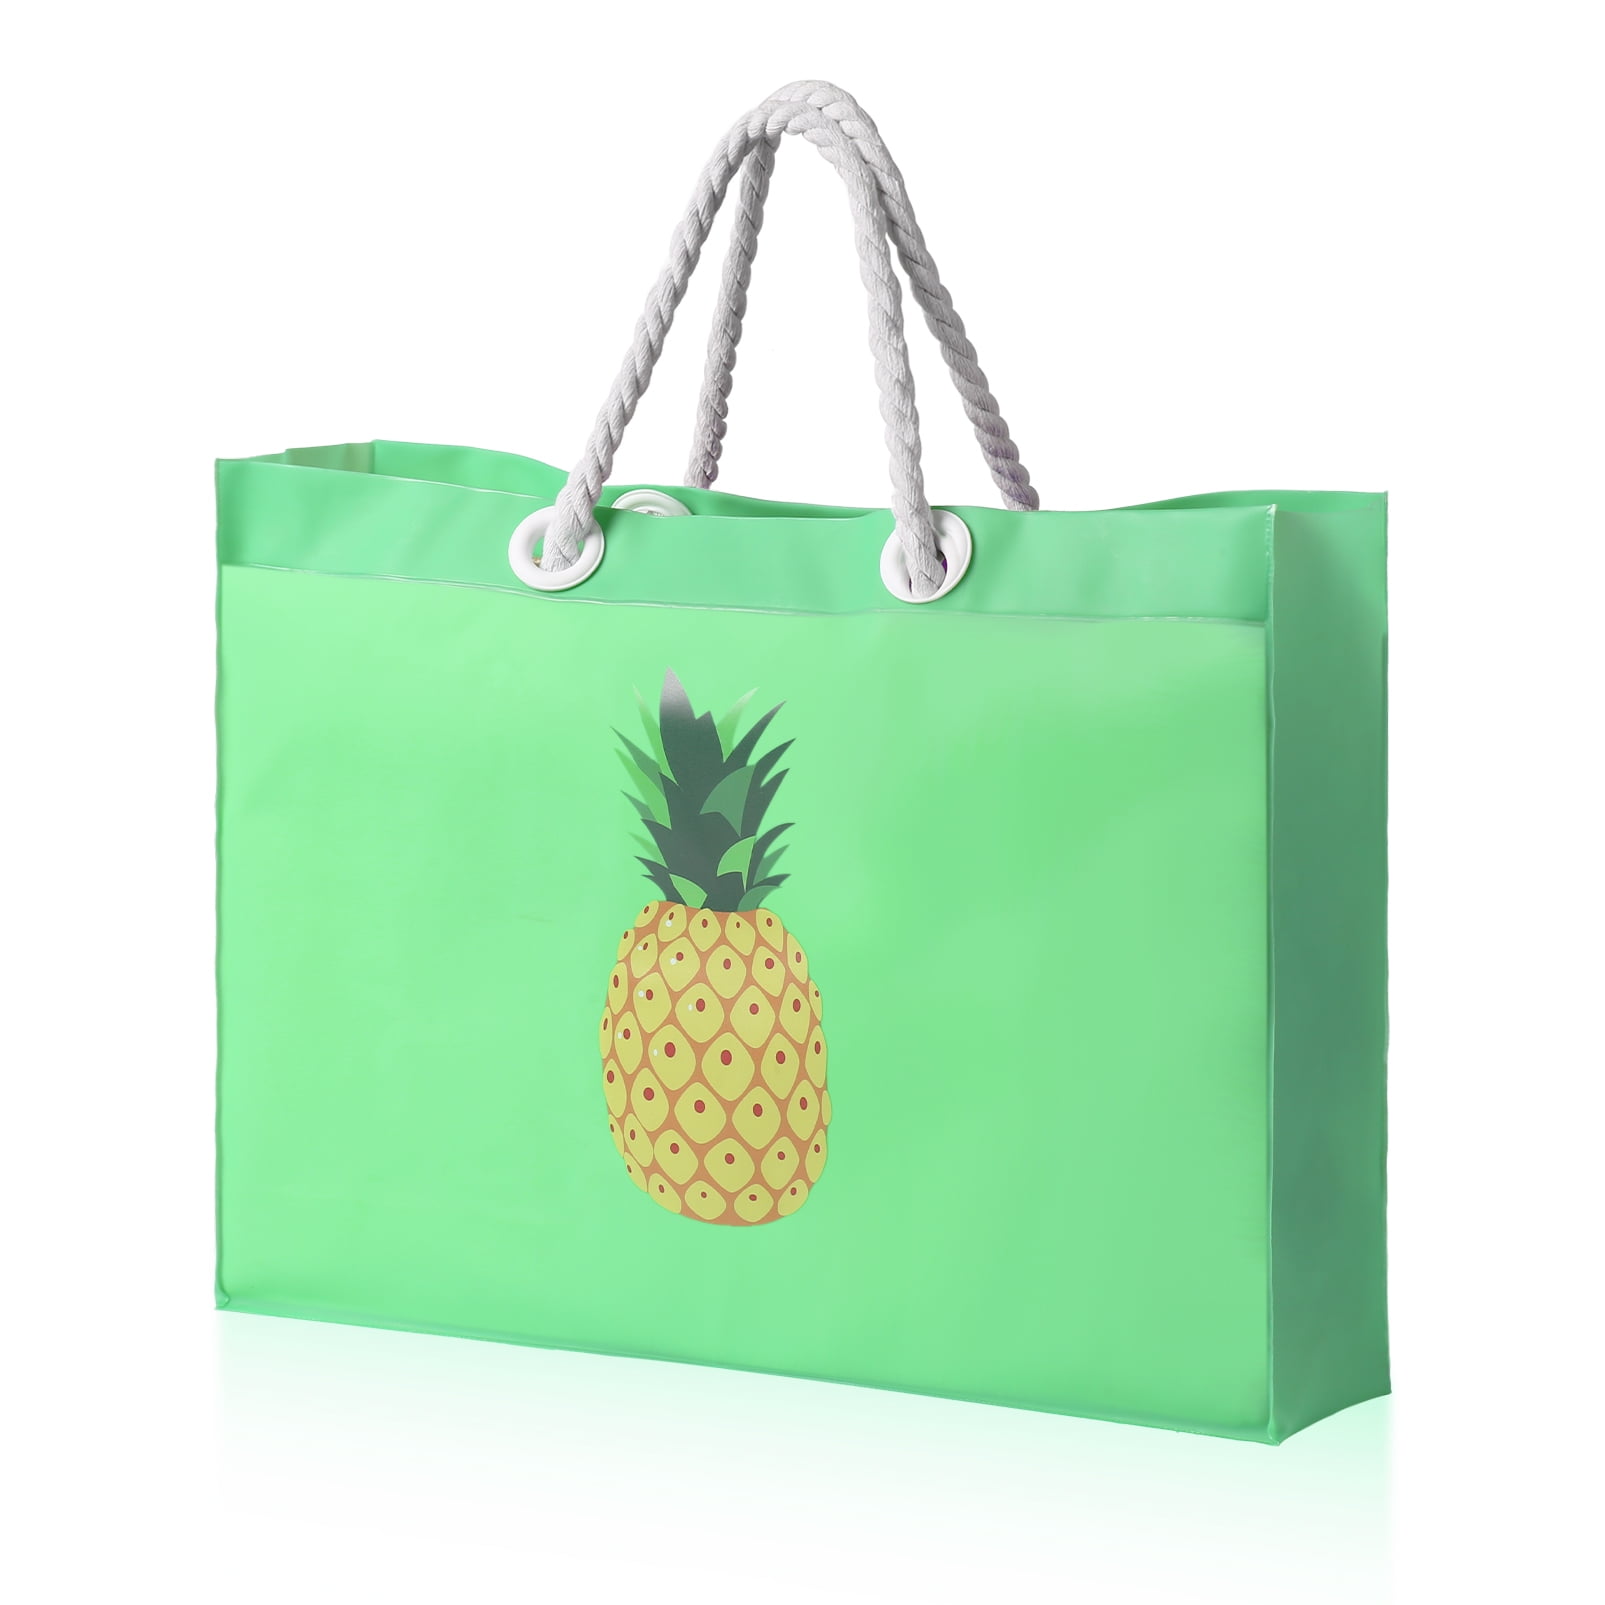  GSHLLO Summer Waterproof PVC Beach Bag Transparent Tote Bag  Clear Stadium Bag for Women Girls Kids Orange : Clothing, Shoes & Jewelry